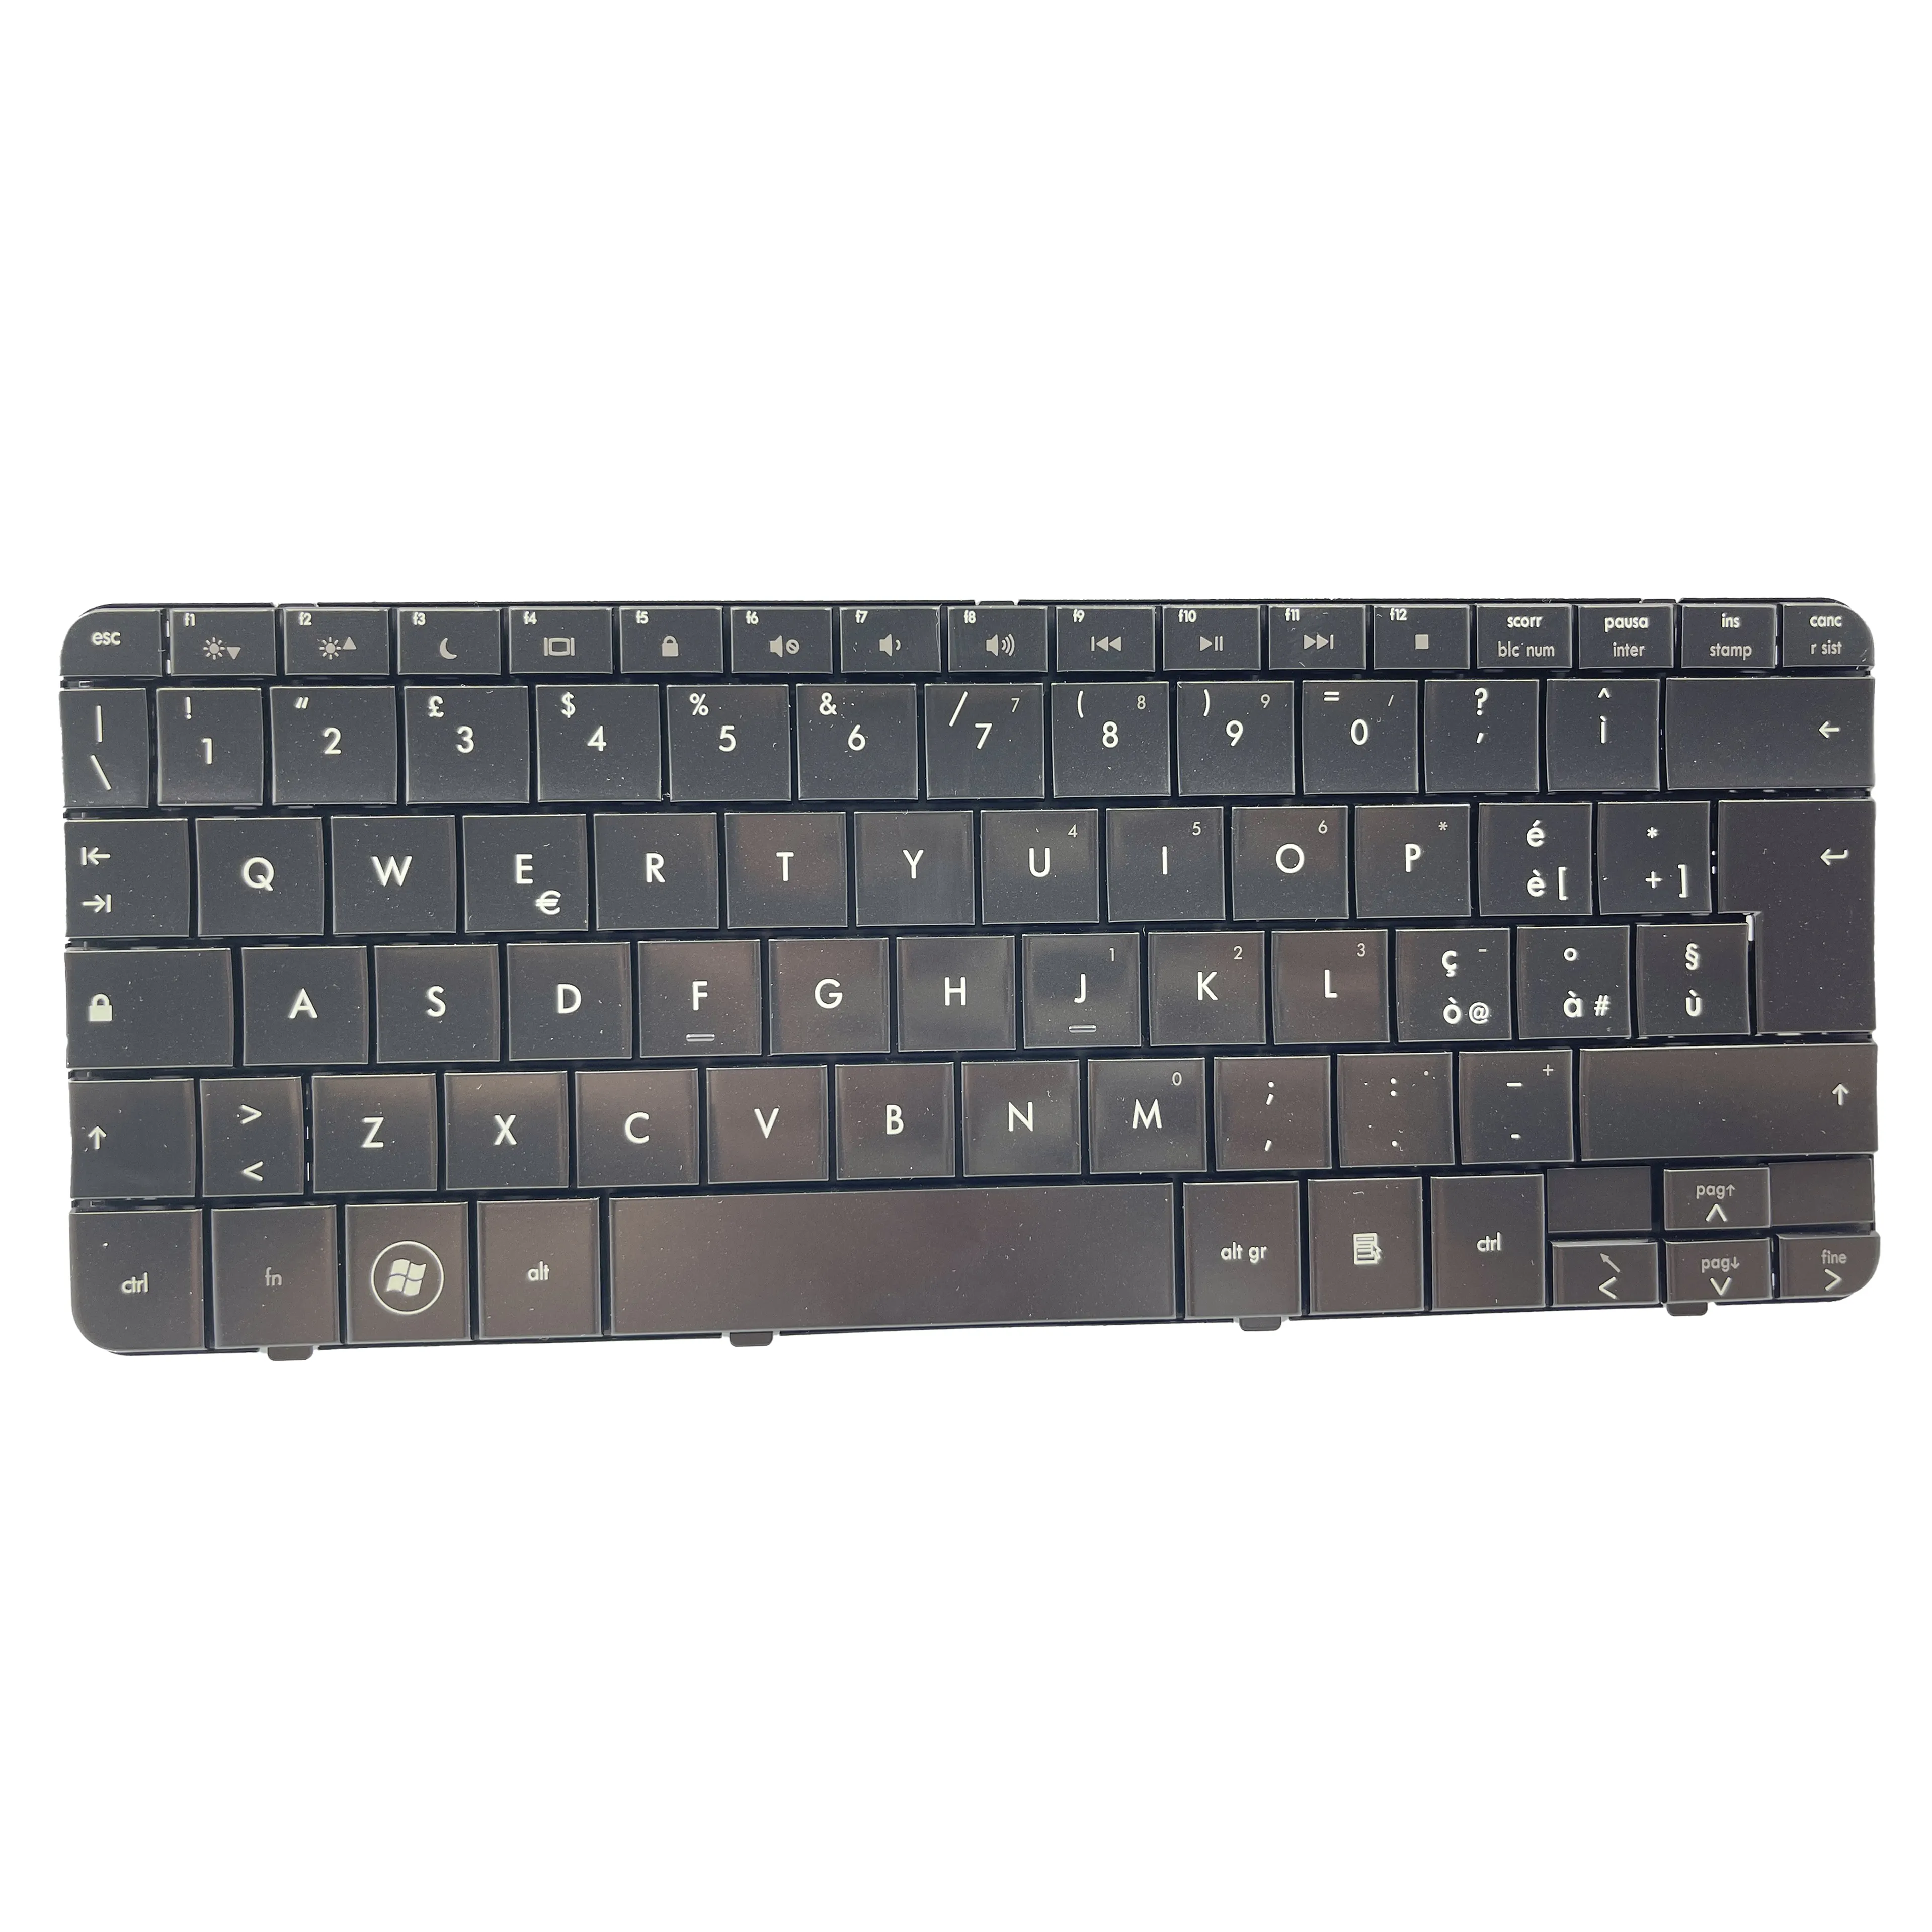 Teclado italiano para ordenador portátil HP Pavilion DV2 DV2-1000, teclado negro